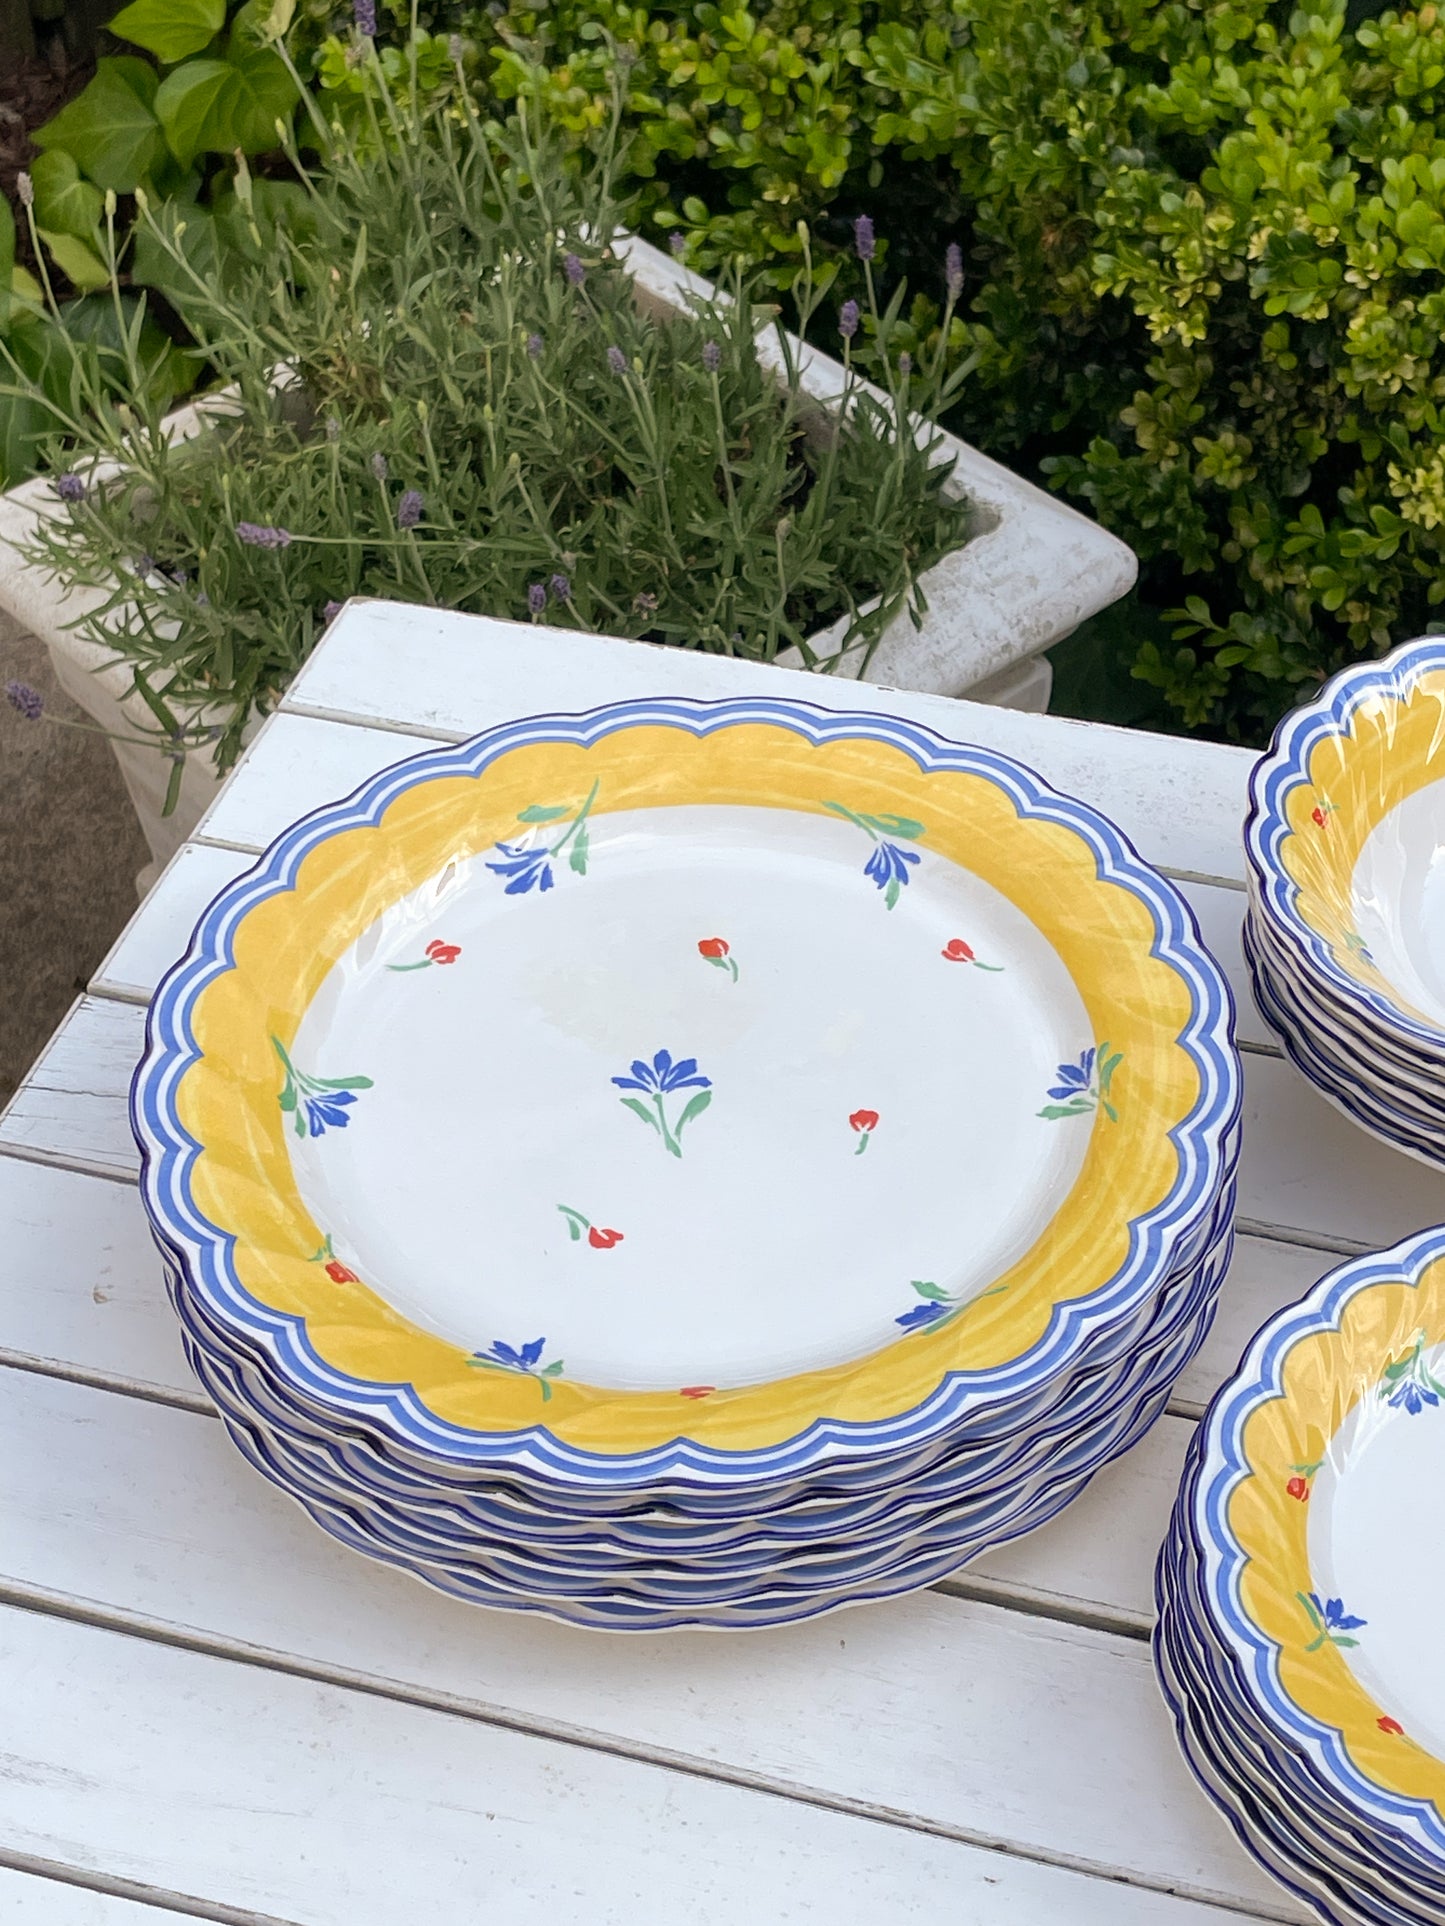 Sunshine and Blue Skies Dinner Plates, Set of 6